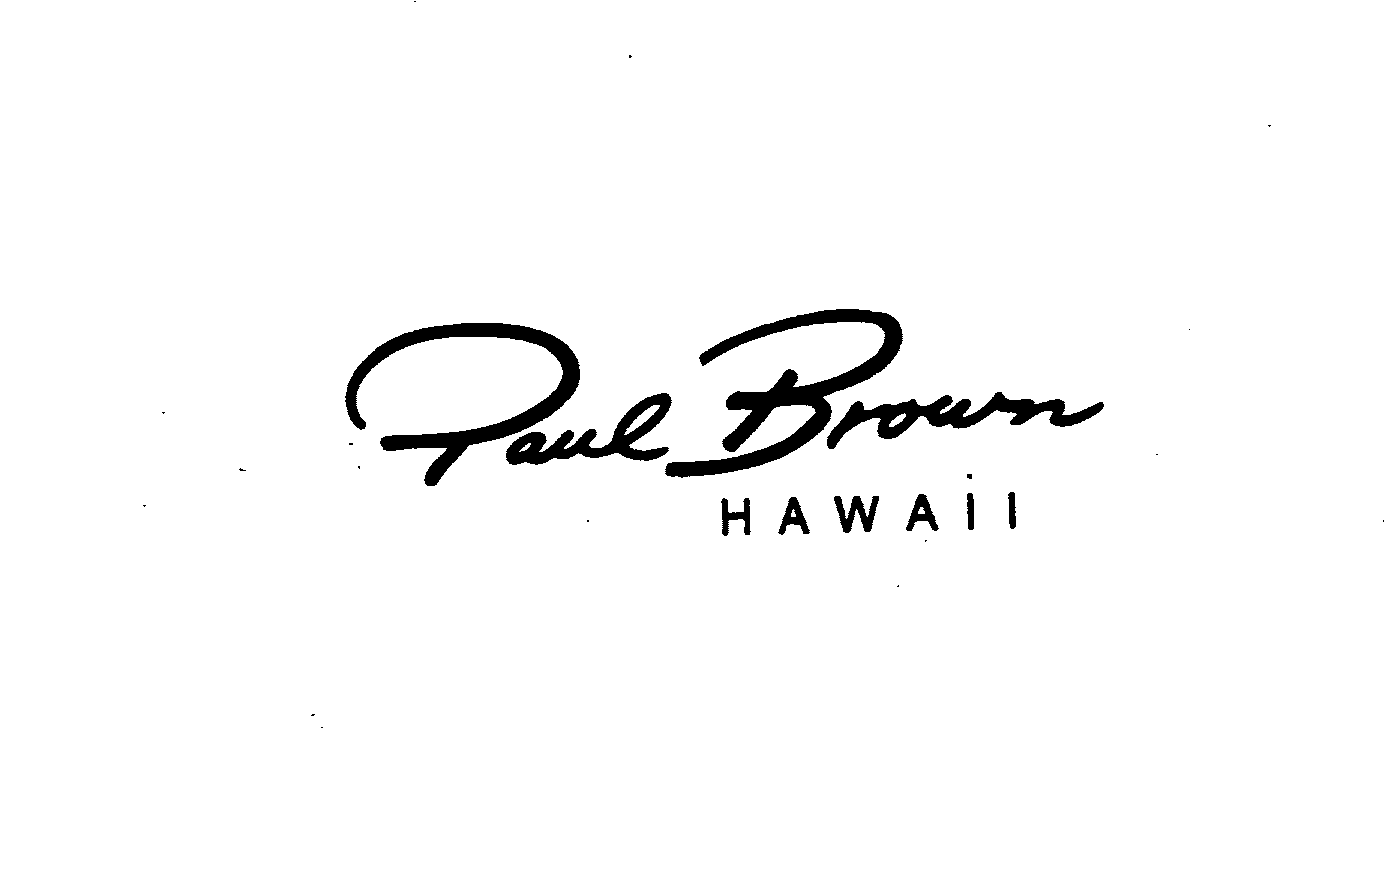 PAUL BROWN HAWAII